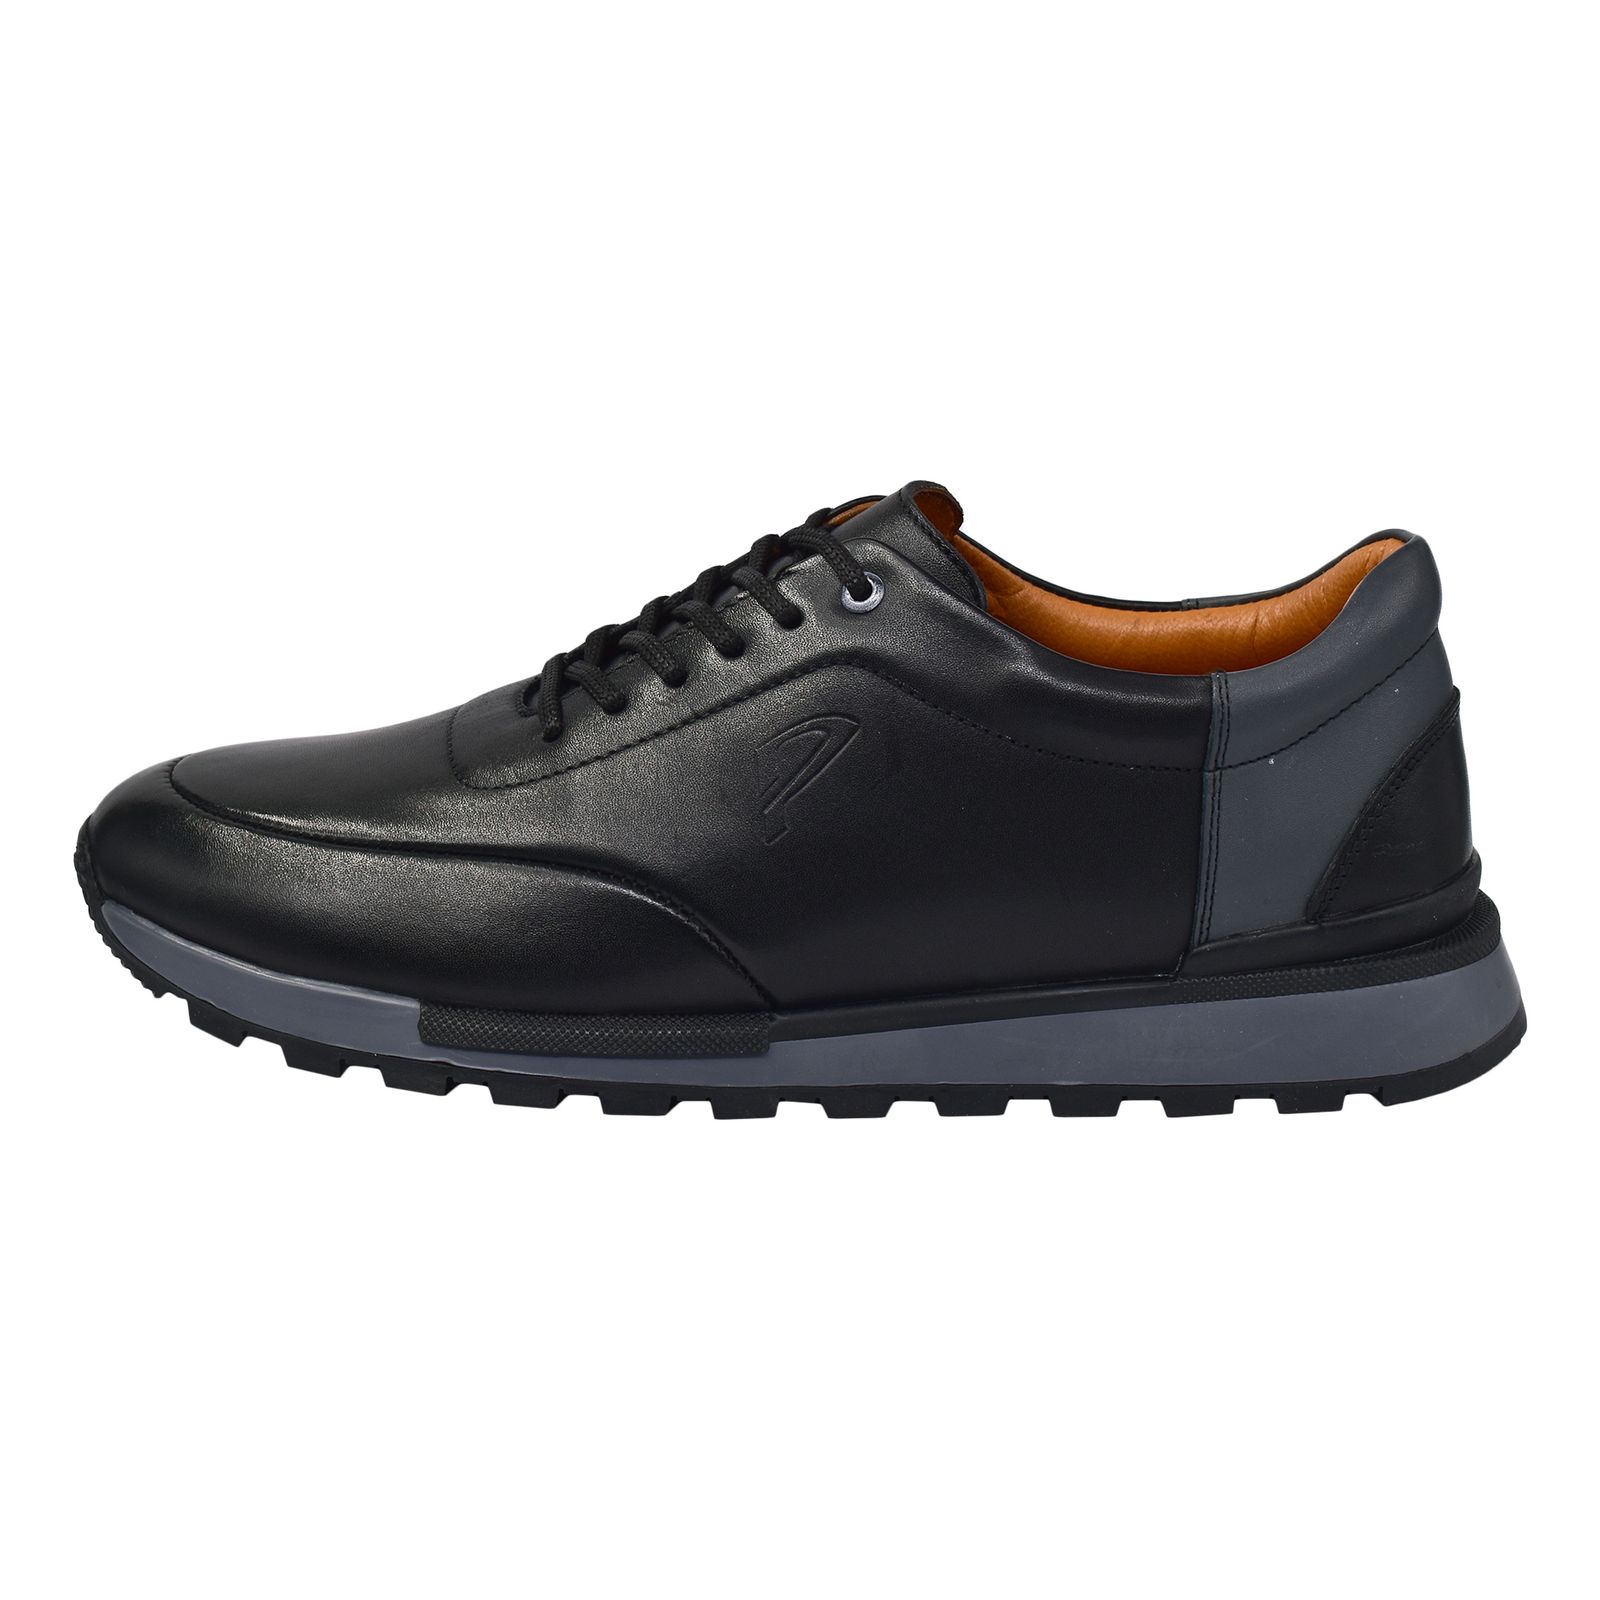 کفش روزمره مردانه پاما مدل ME-680 کد G1807 -  - 1